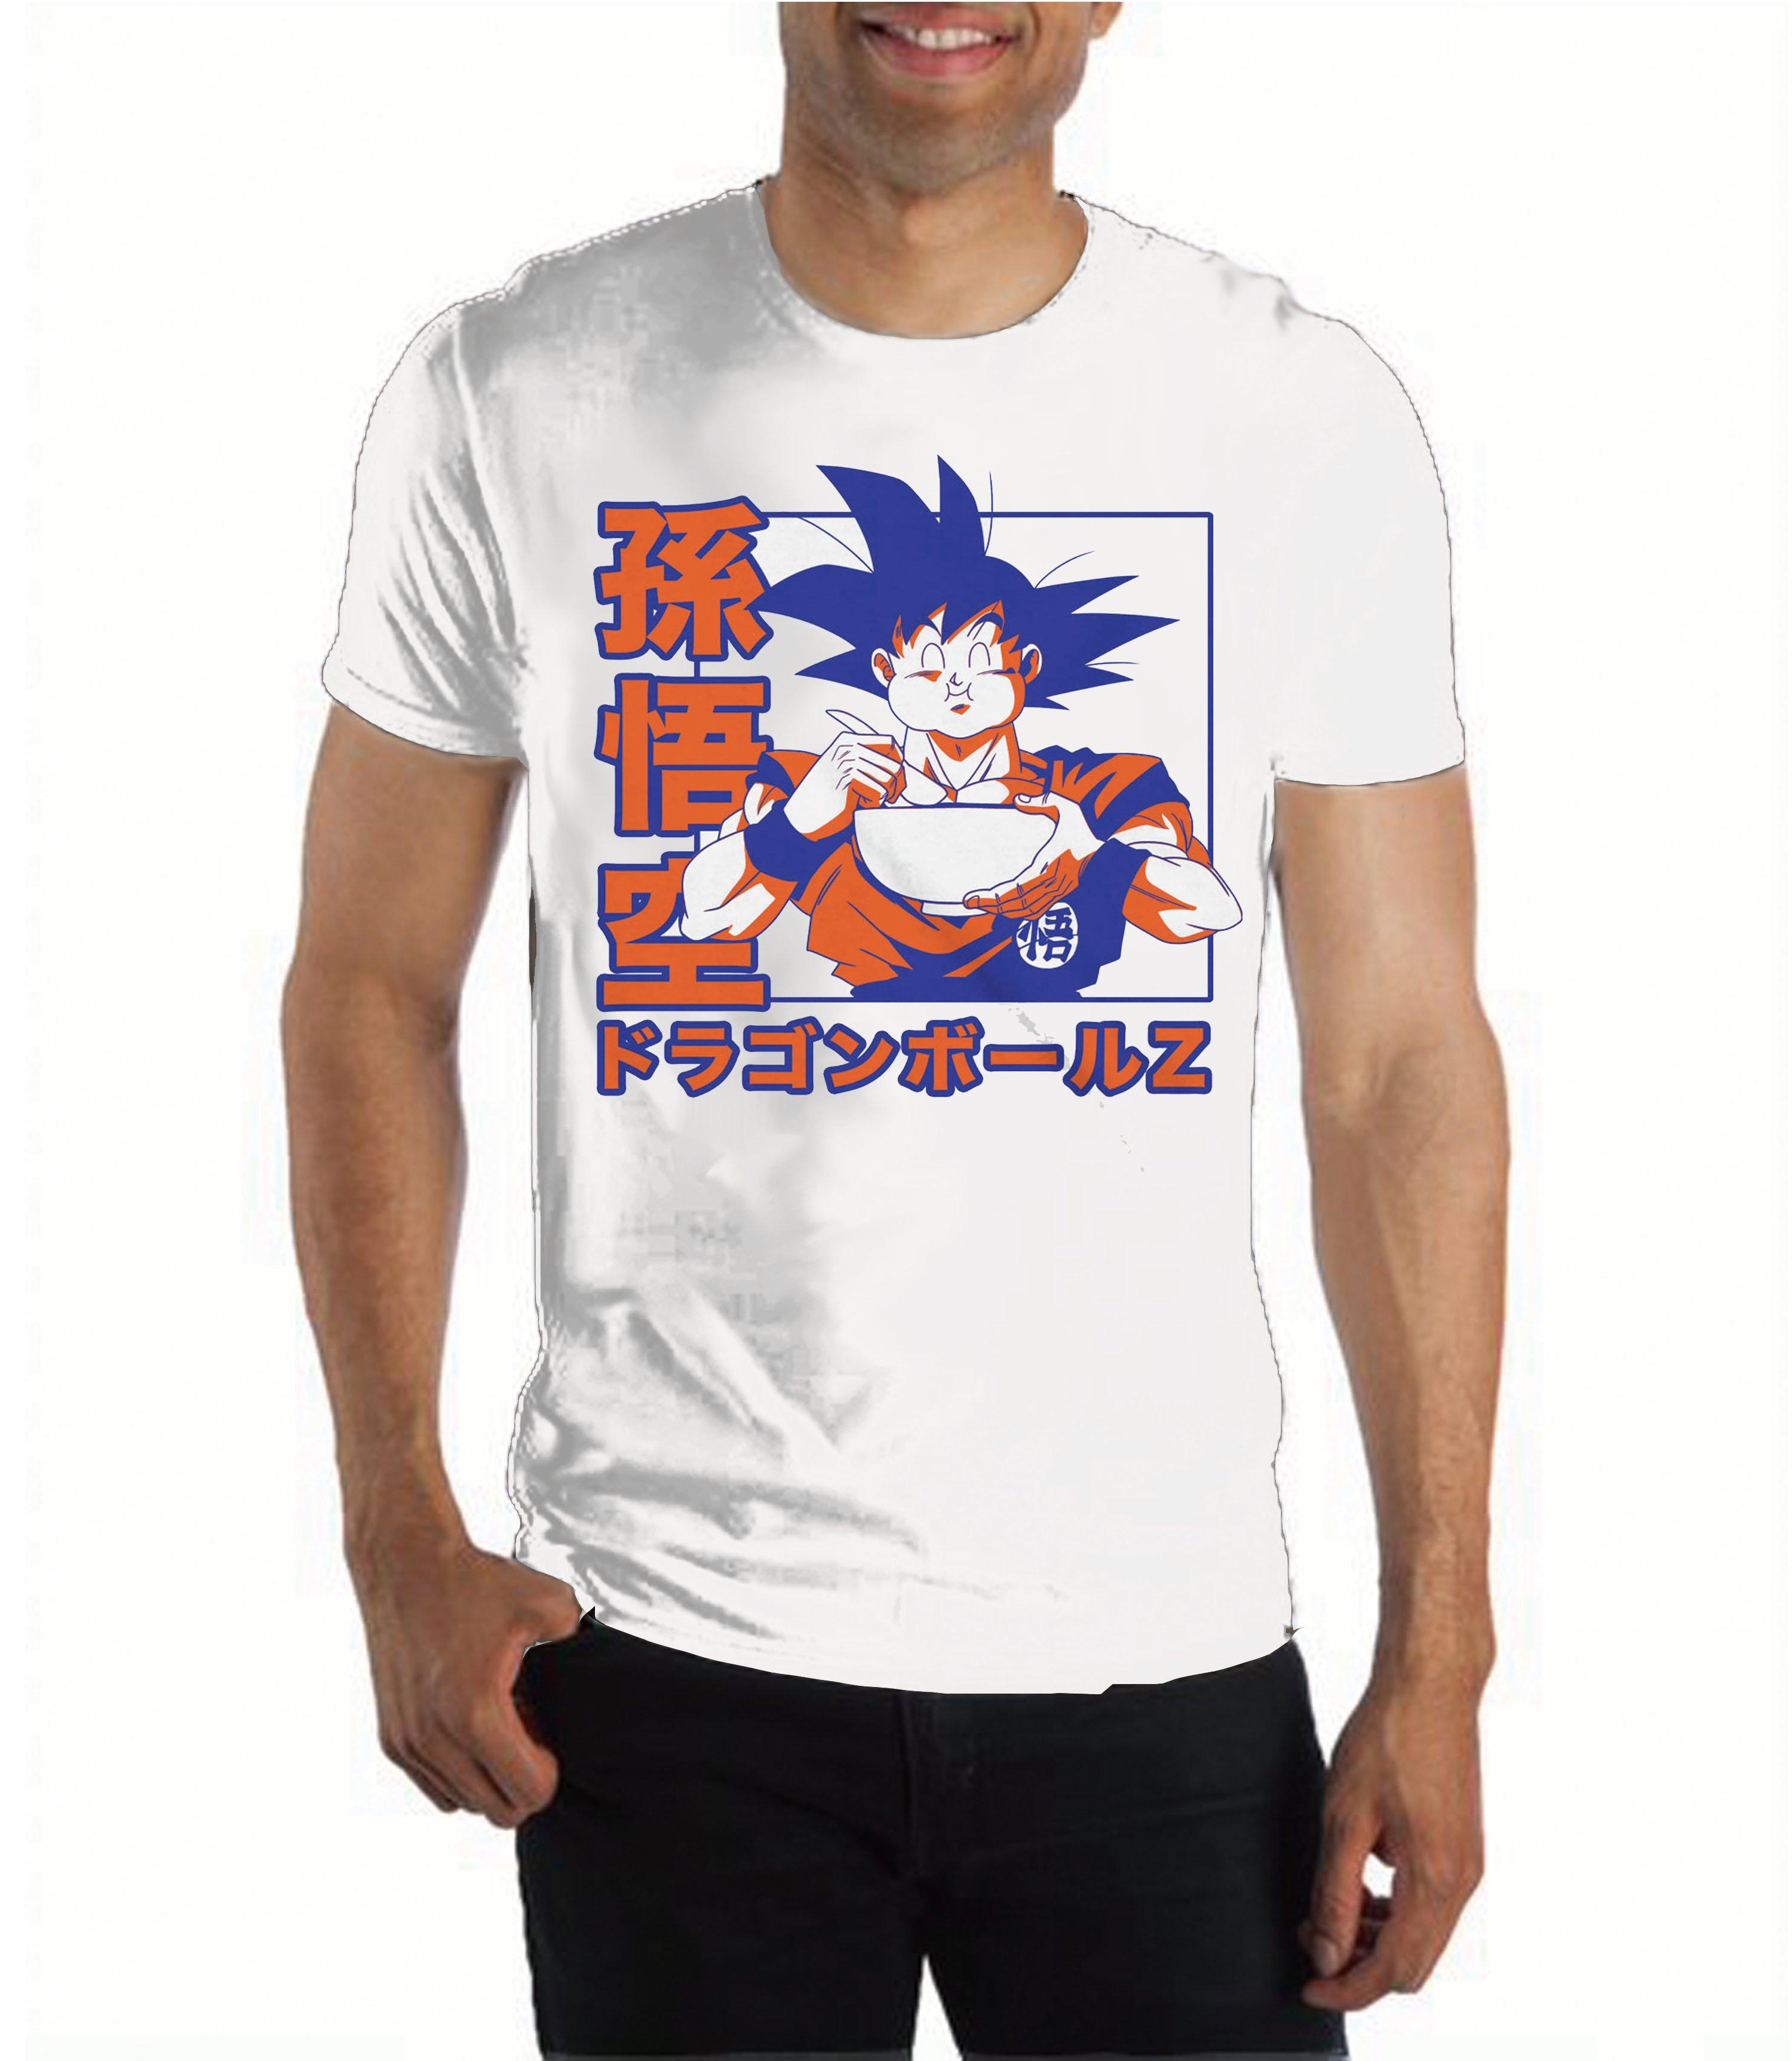 songokuversusnappa: T Shirt Dragon Ball Z Goku : Dragon Ball Z Goku Vegeta Respect Design White 